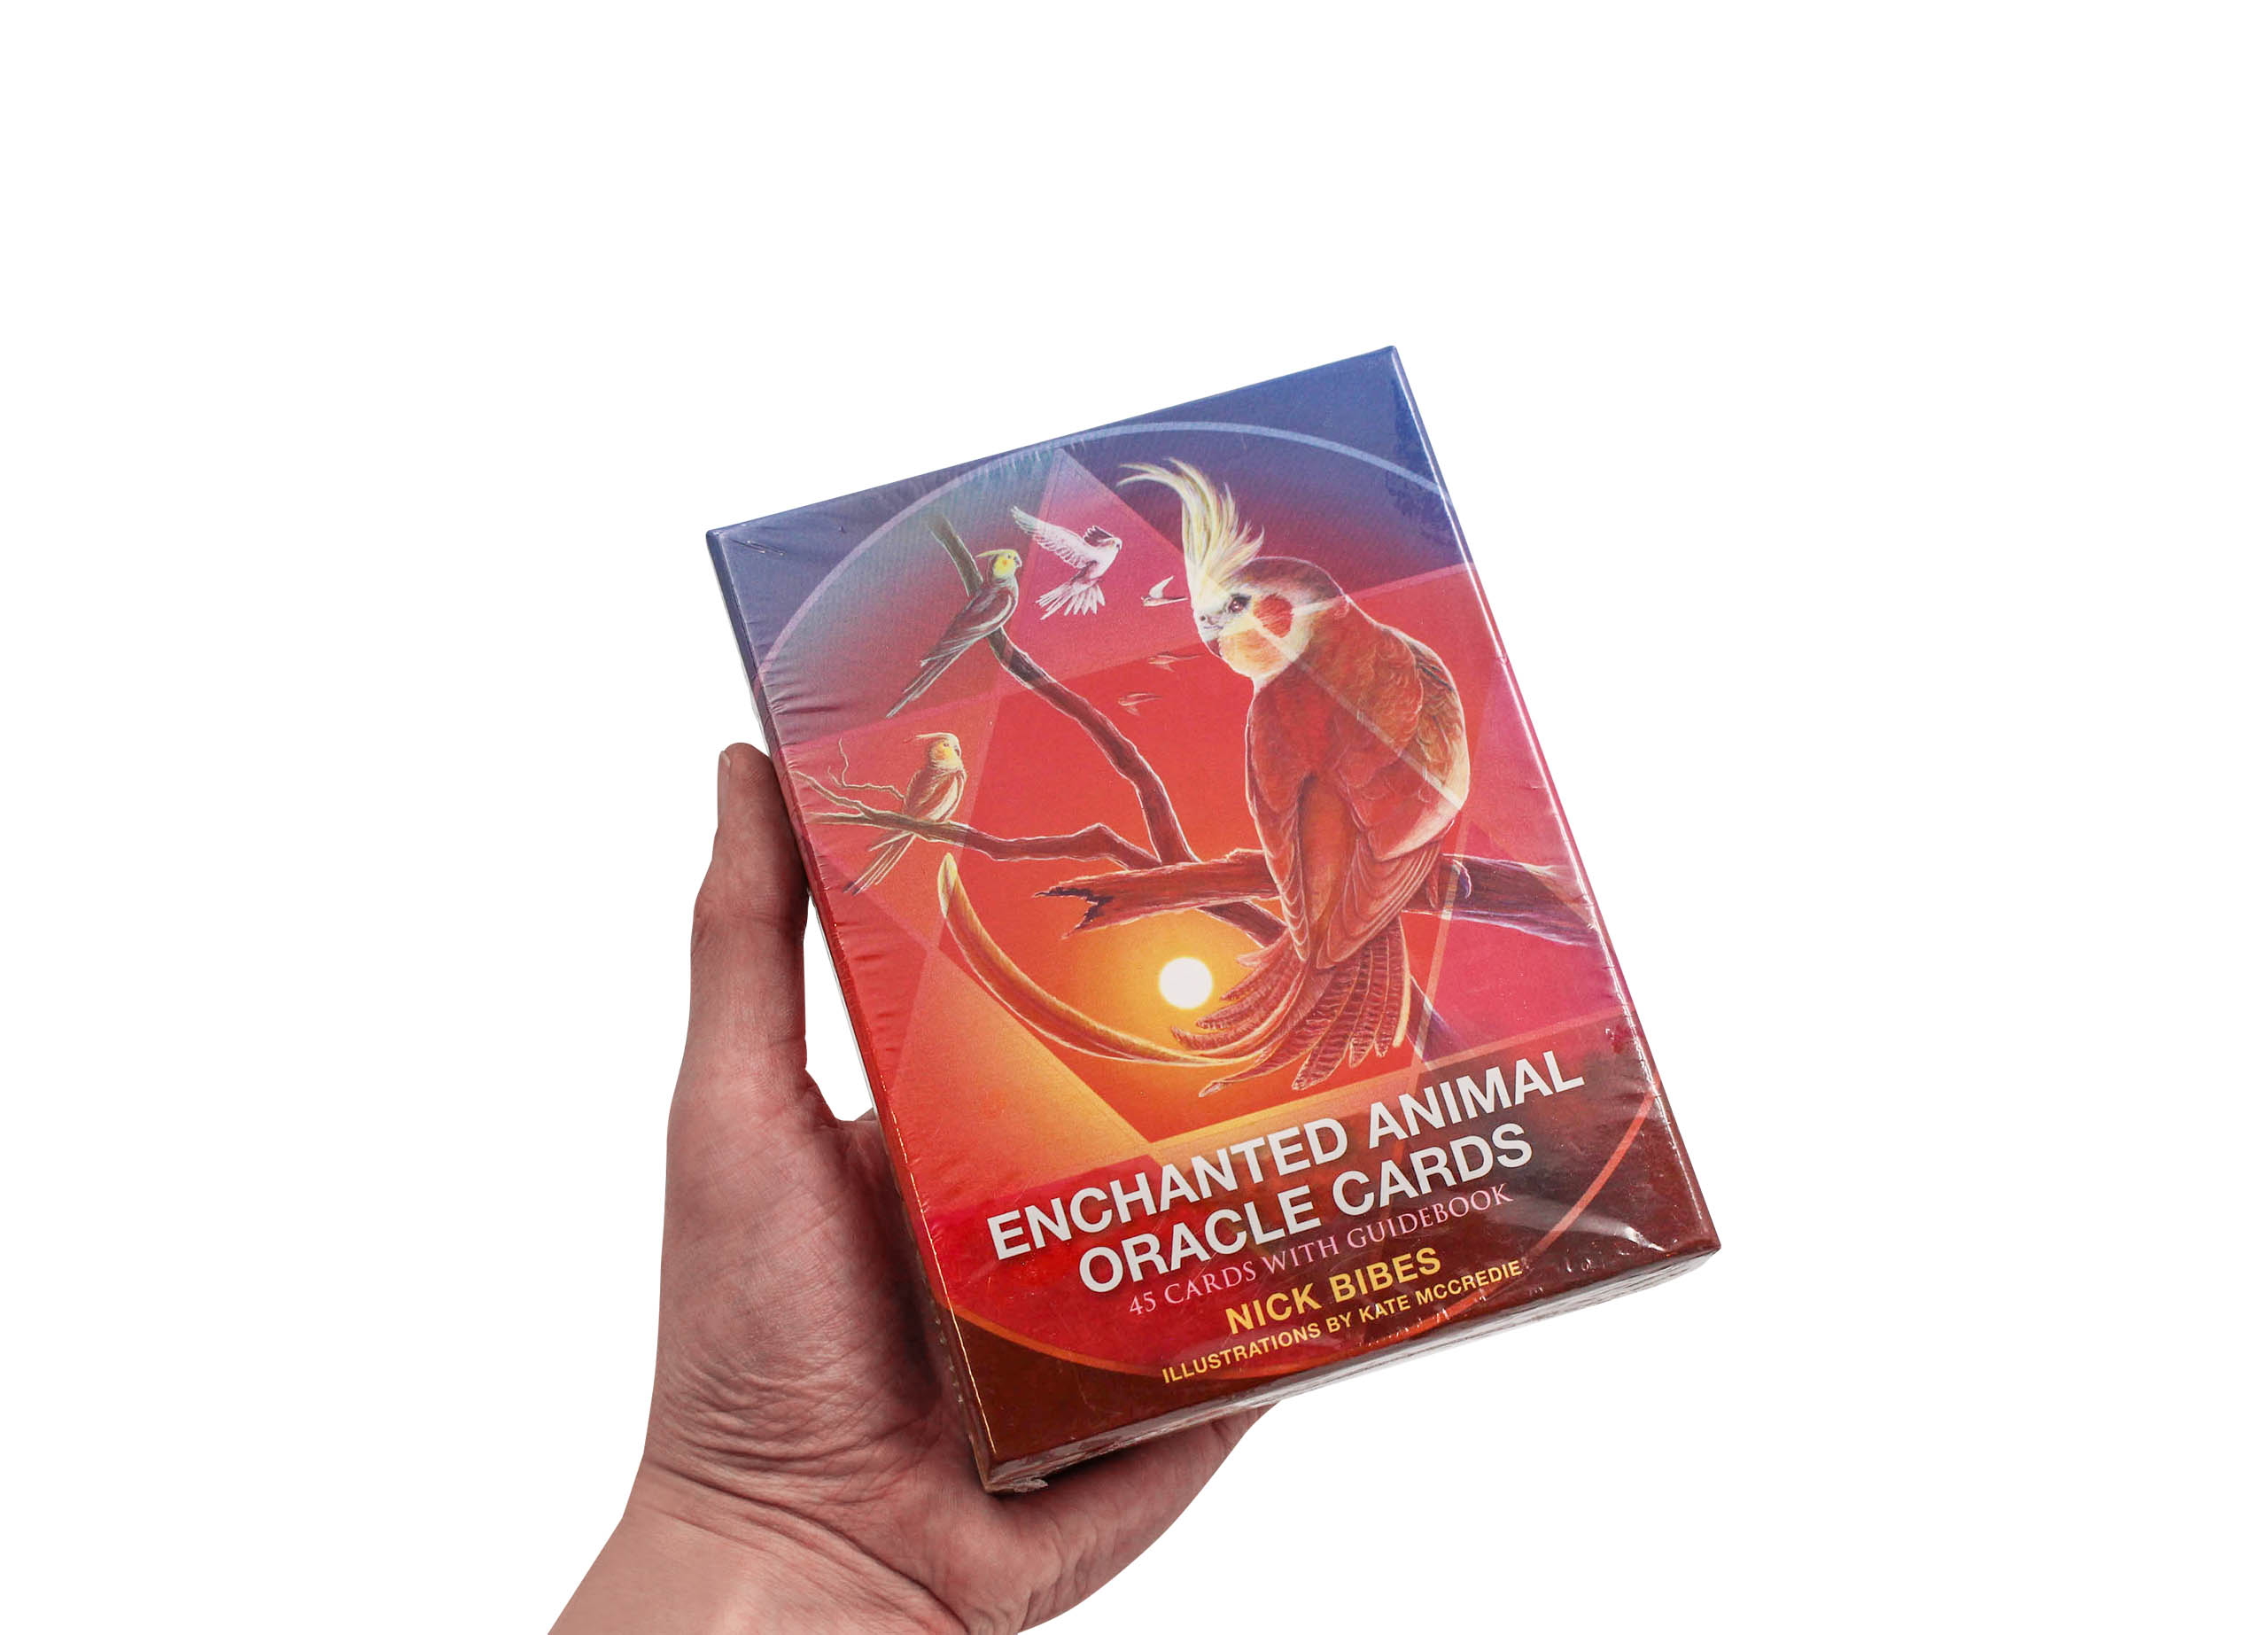 Enchanted Animal - Oracle Cards - Crystal Dreams